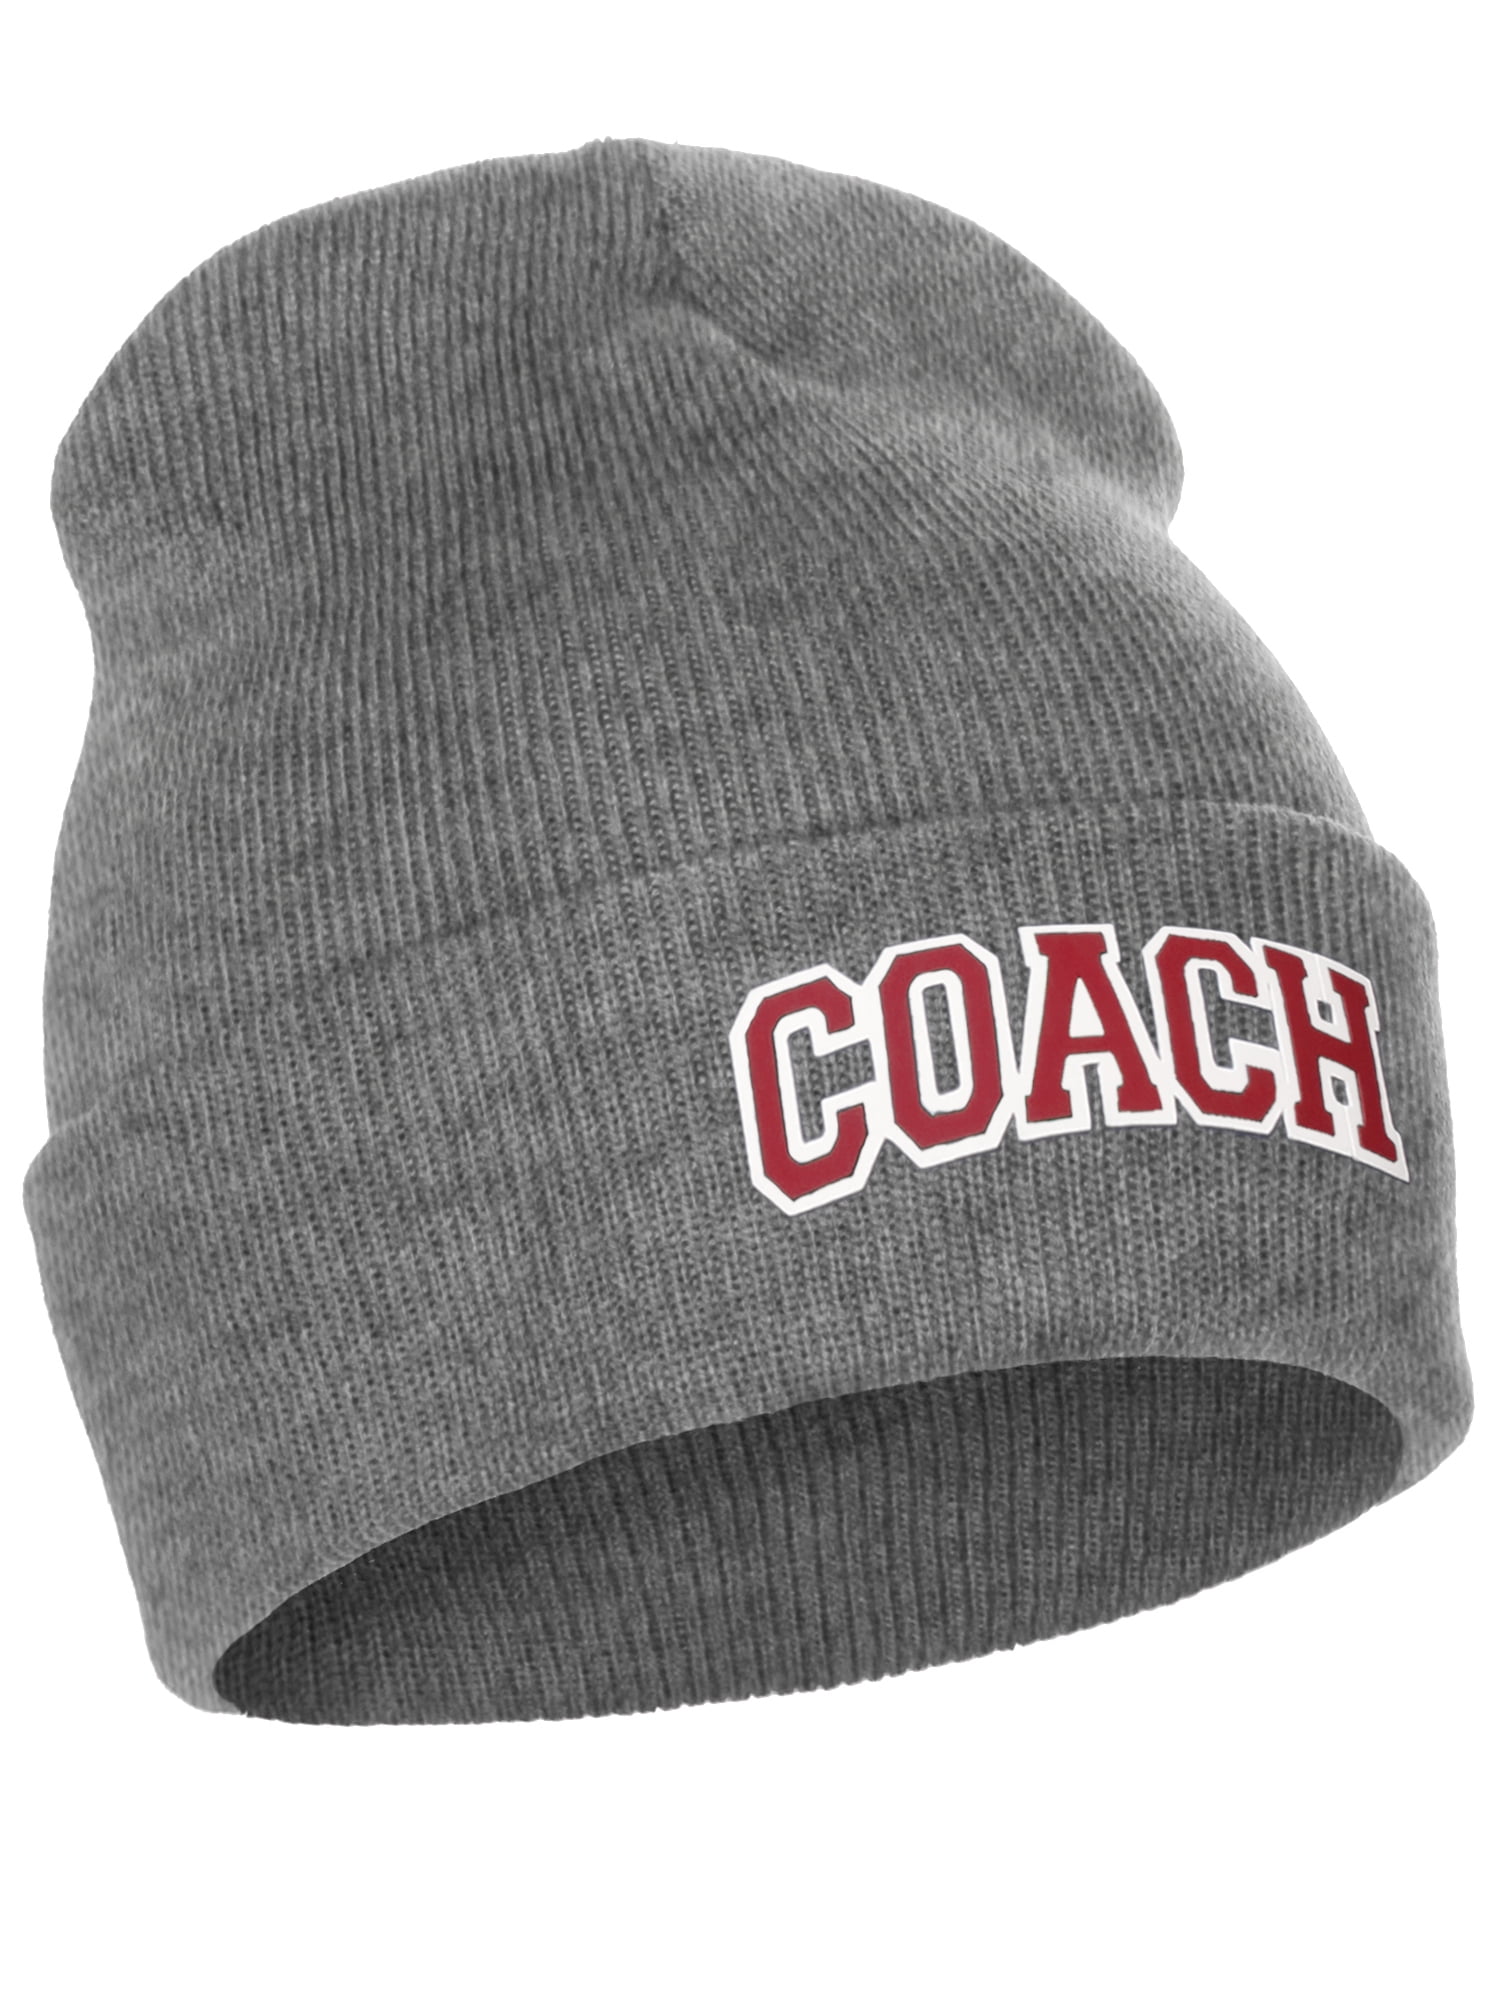 I&W Arch Cuffed Black Letters Beanie Coach Beanie Nay White Hat, Sports Winter Knit Team